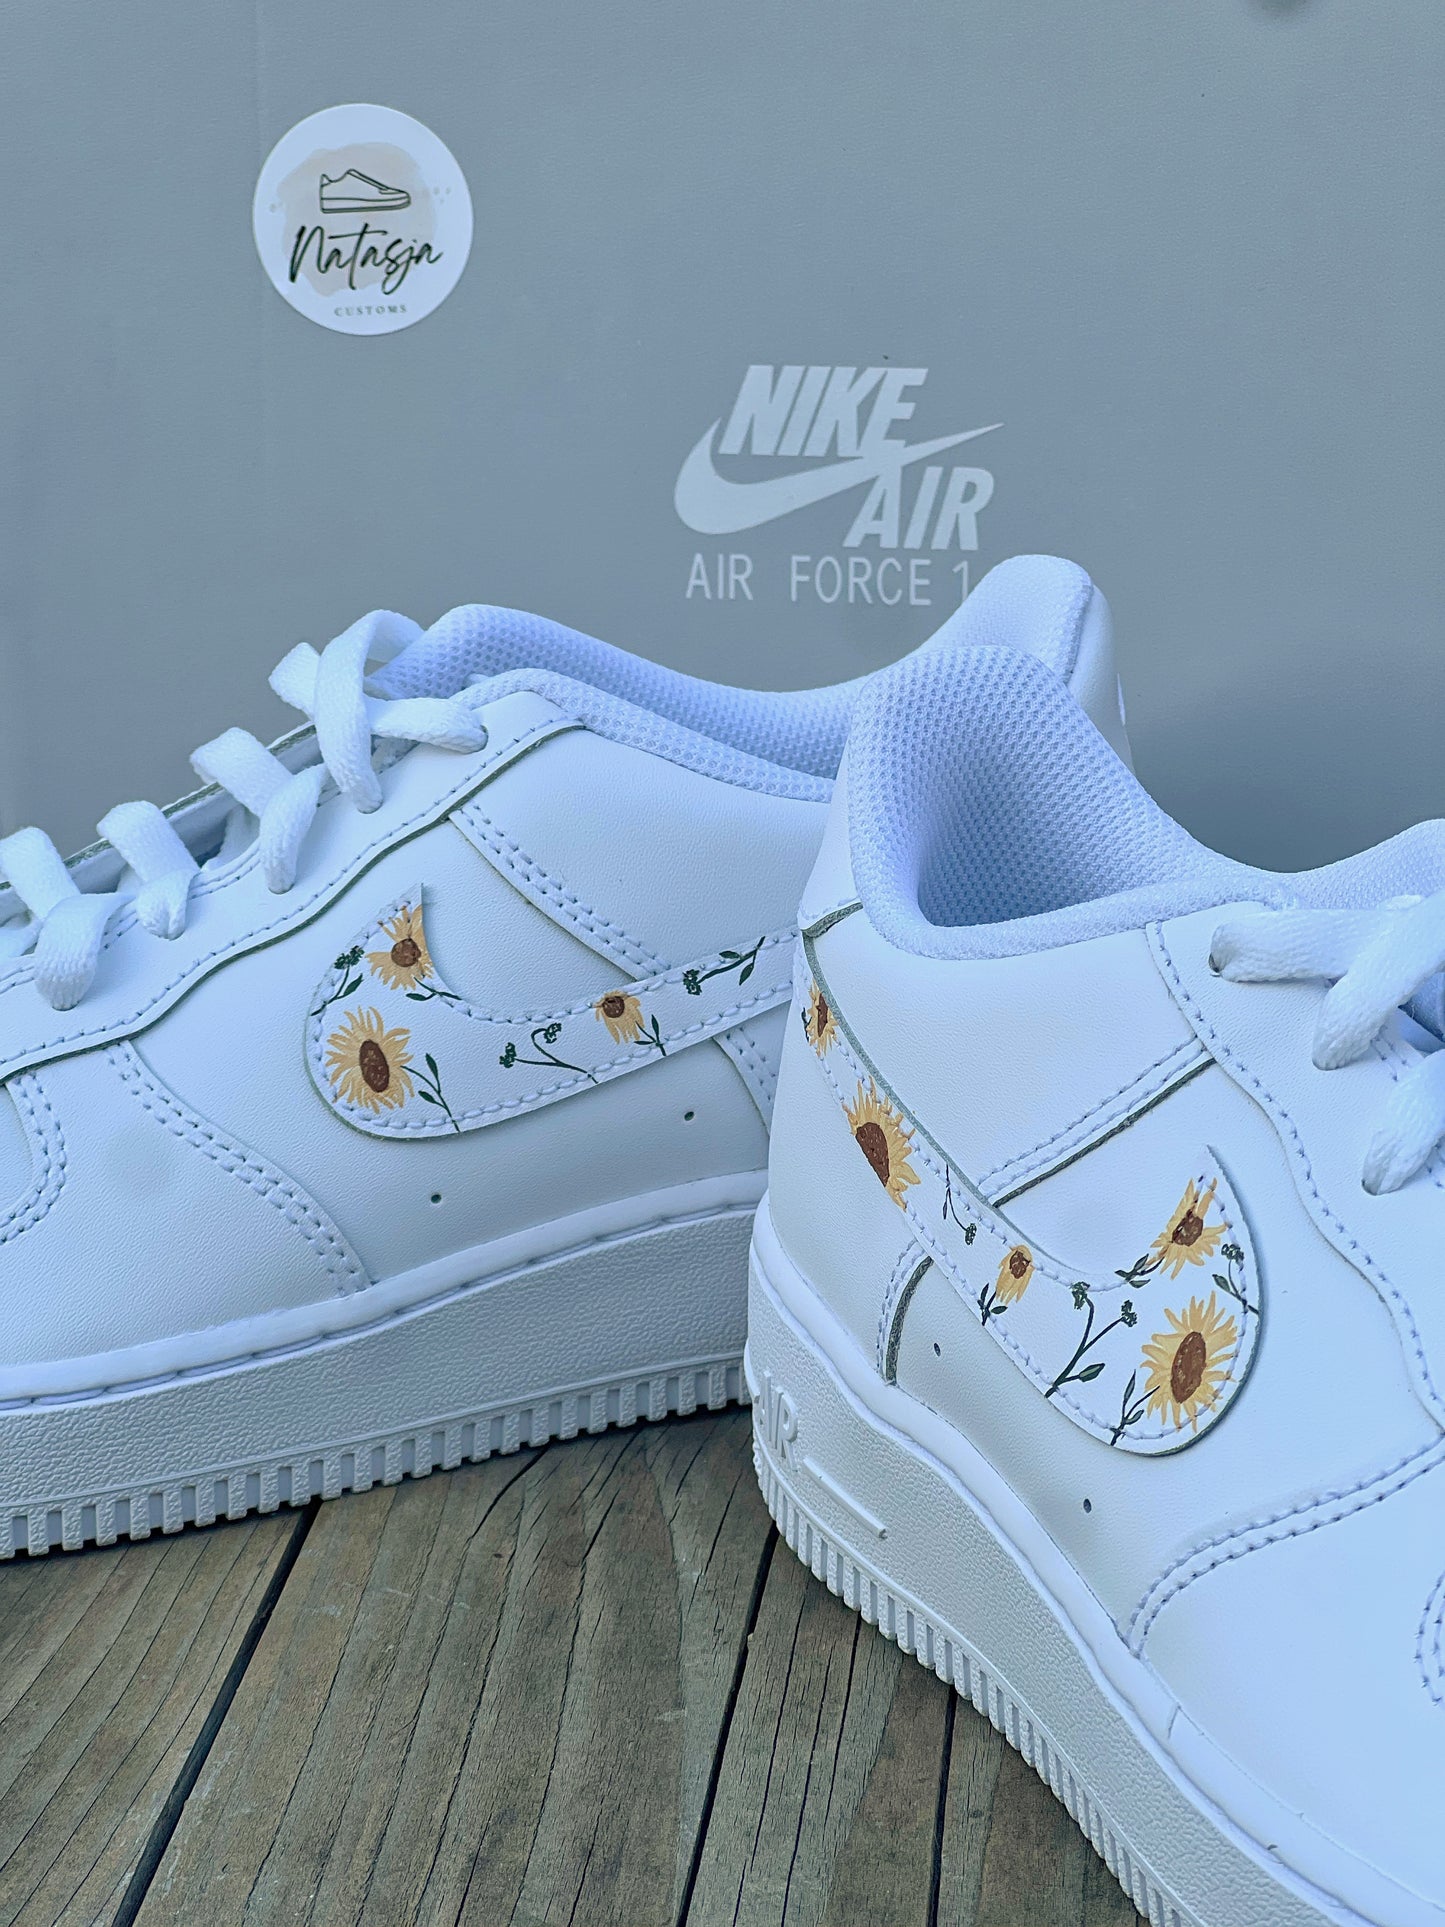 Nike Air Force. Handgeschilderde zonnebloem customs.